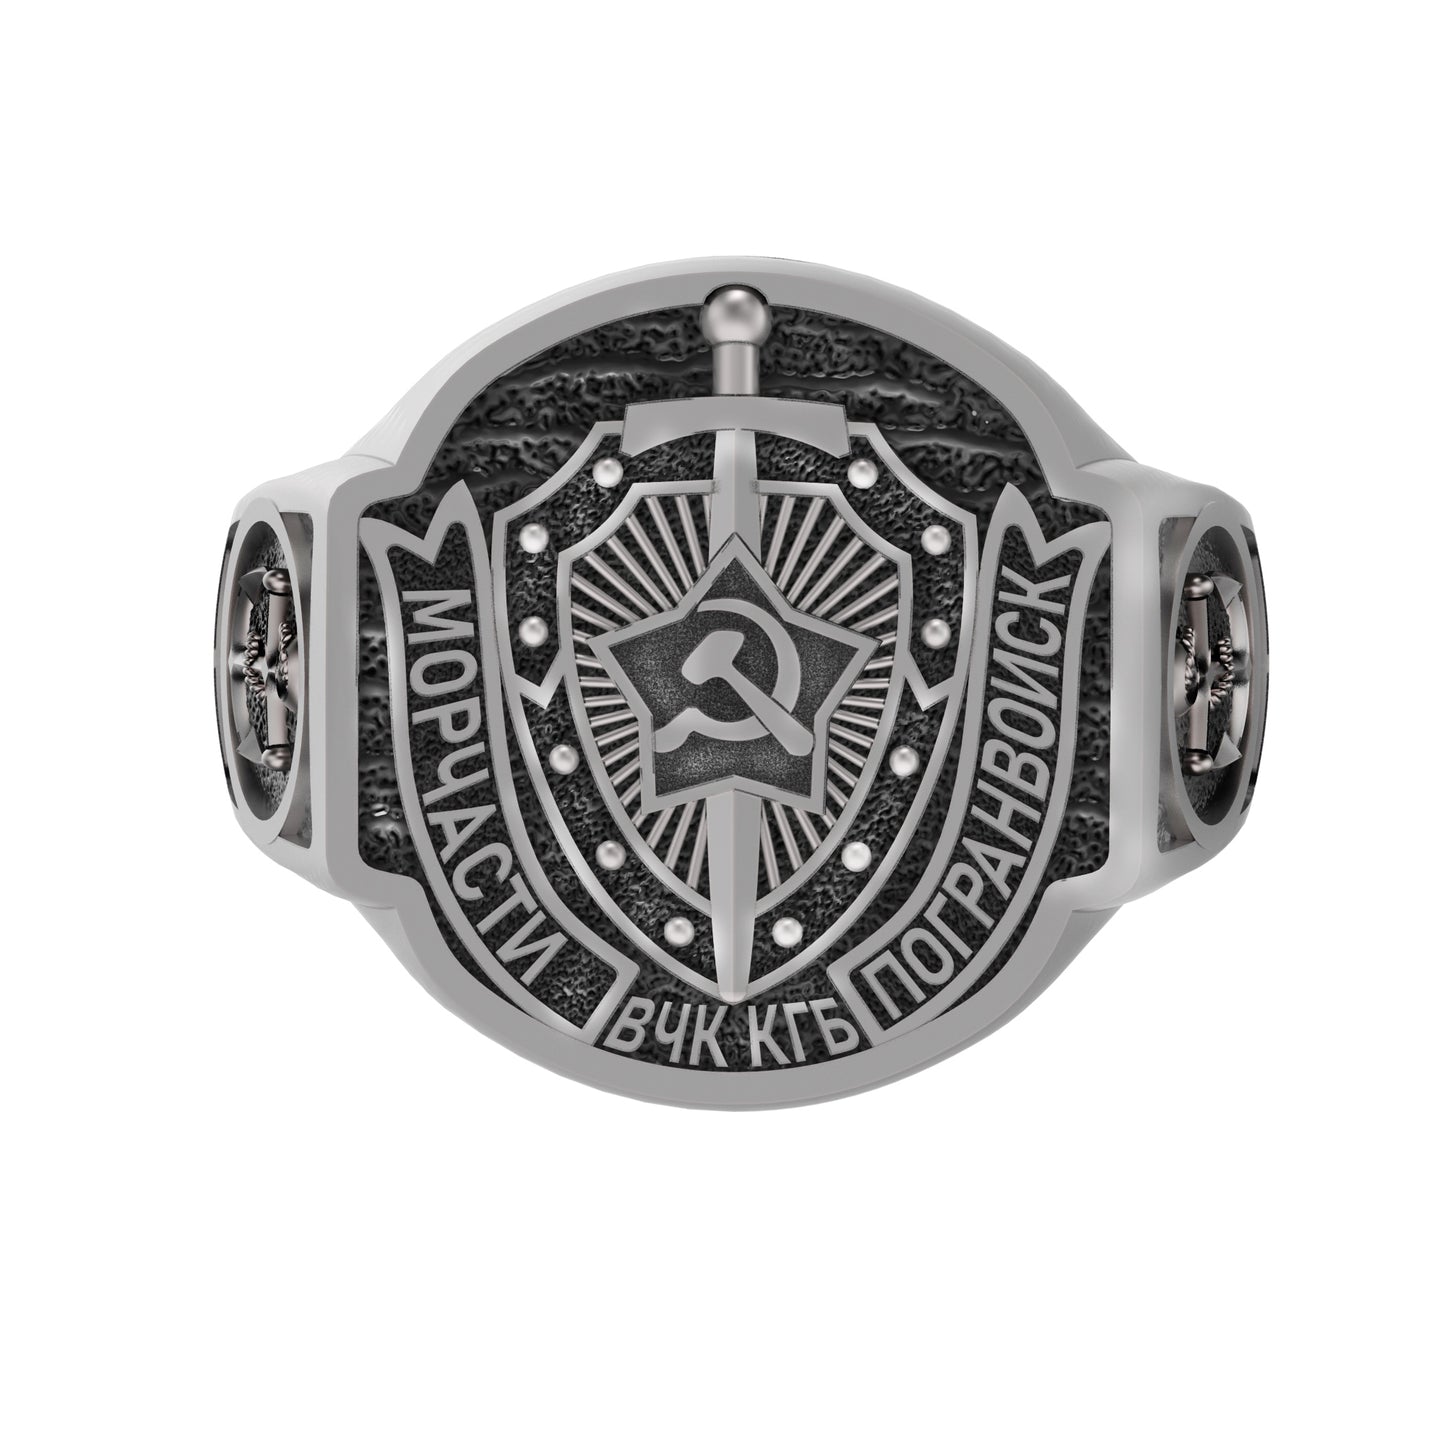 Border Forces KGB USSR, Soviet Union Border Troops, Mens Silver Signet Ring